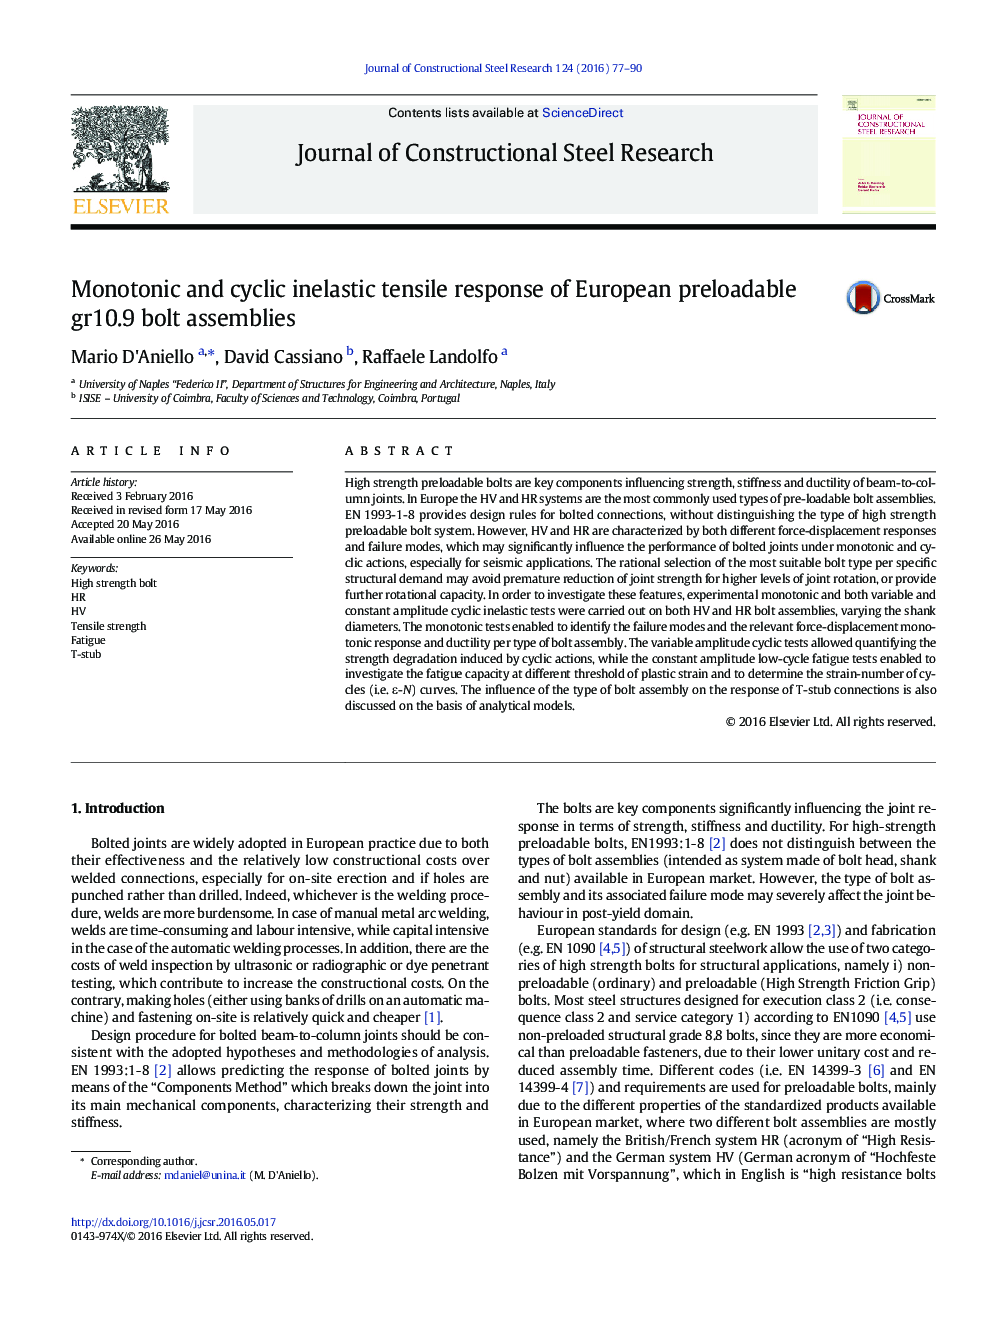 Monotonic and cyclic inelastic tensile response of European preloadable gr10.9 bolt assemblies